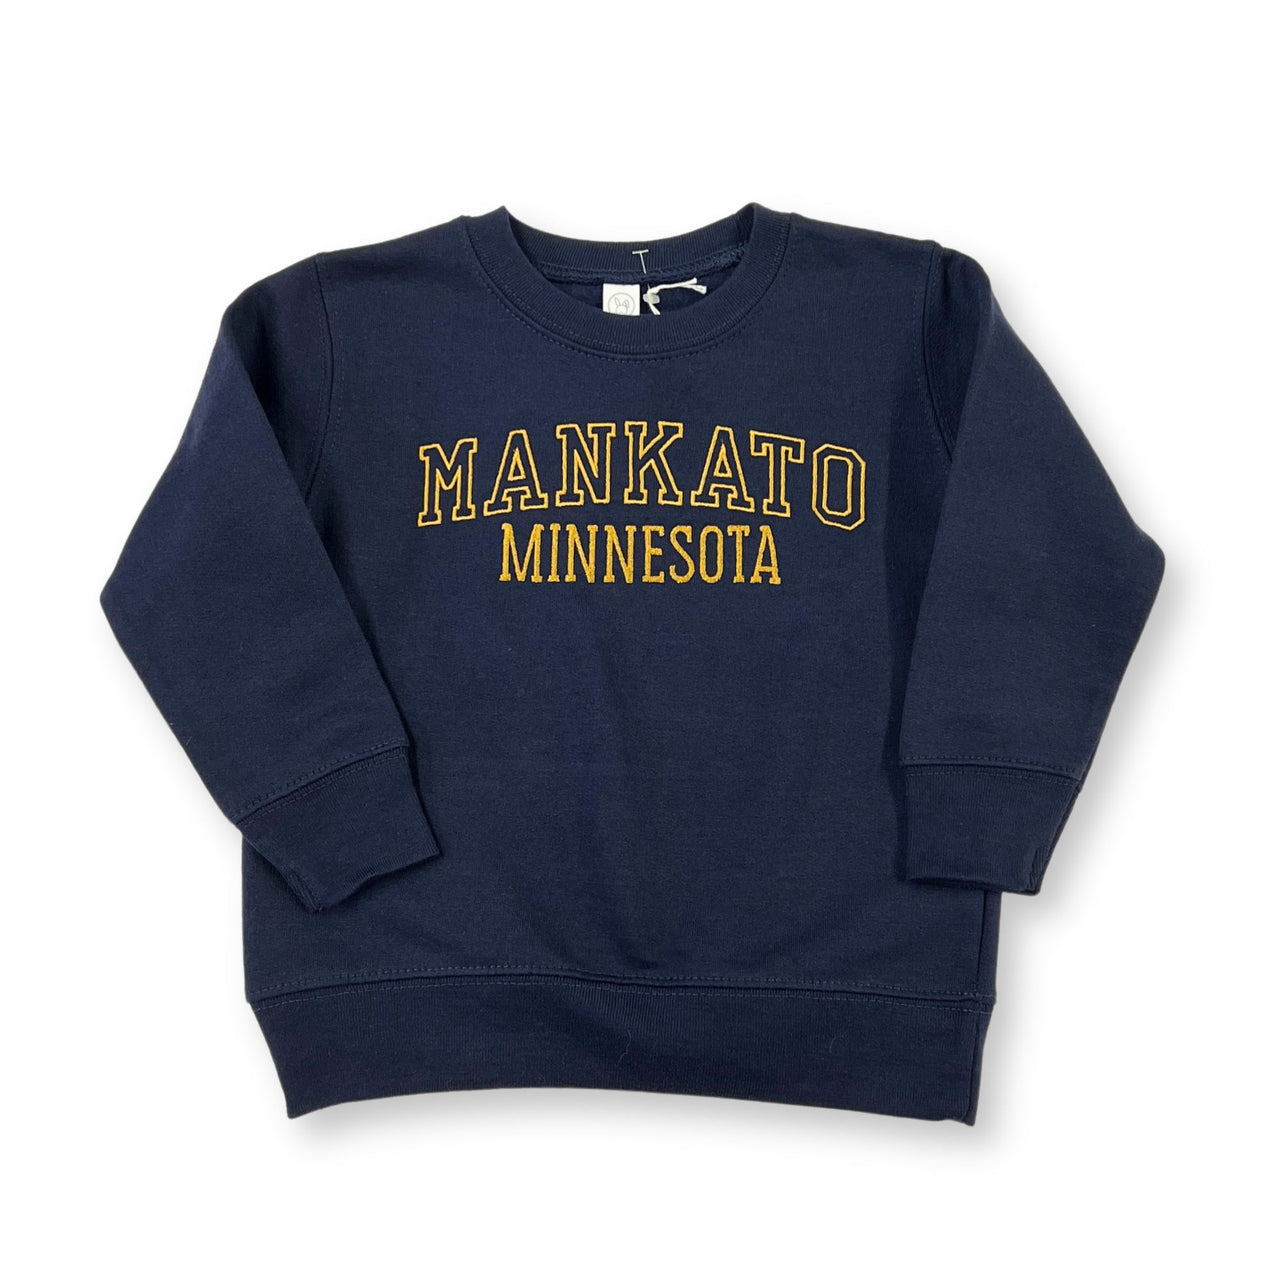 Mankato MN Vintage Athletic Sweatshirt - Navy